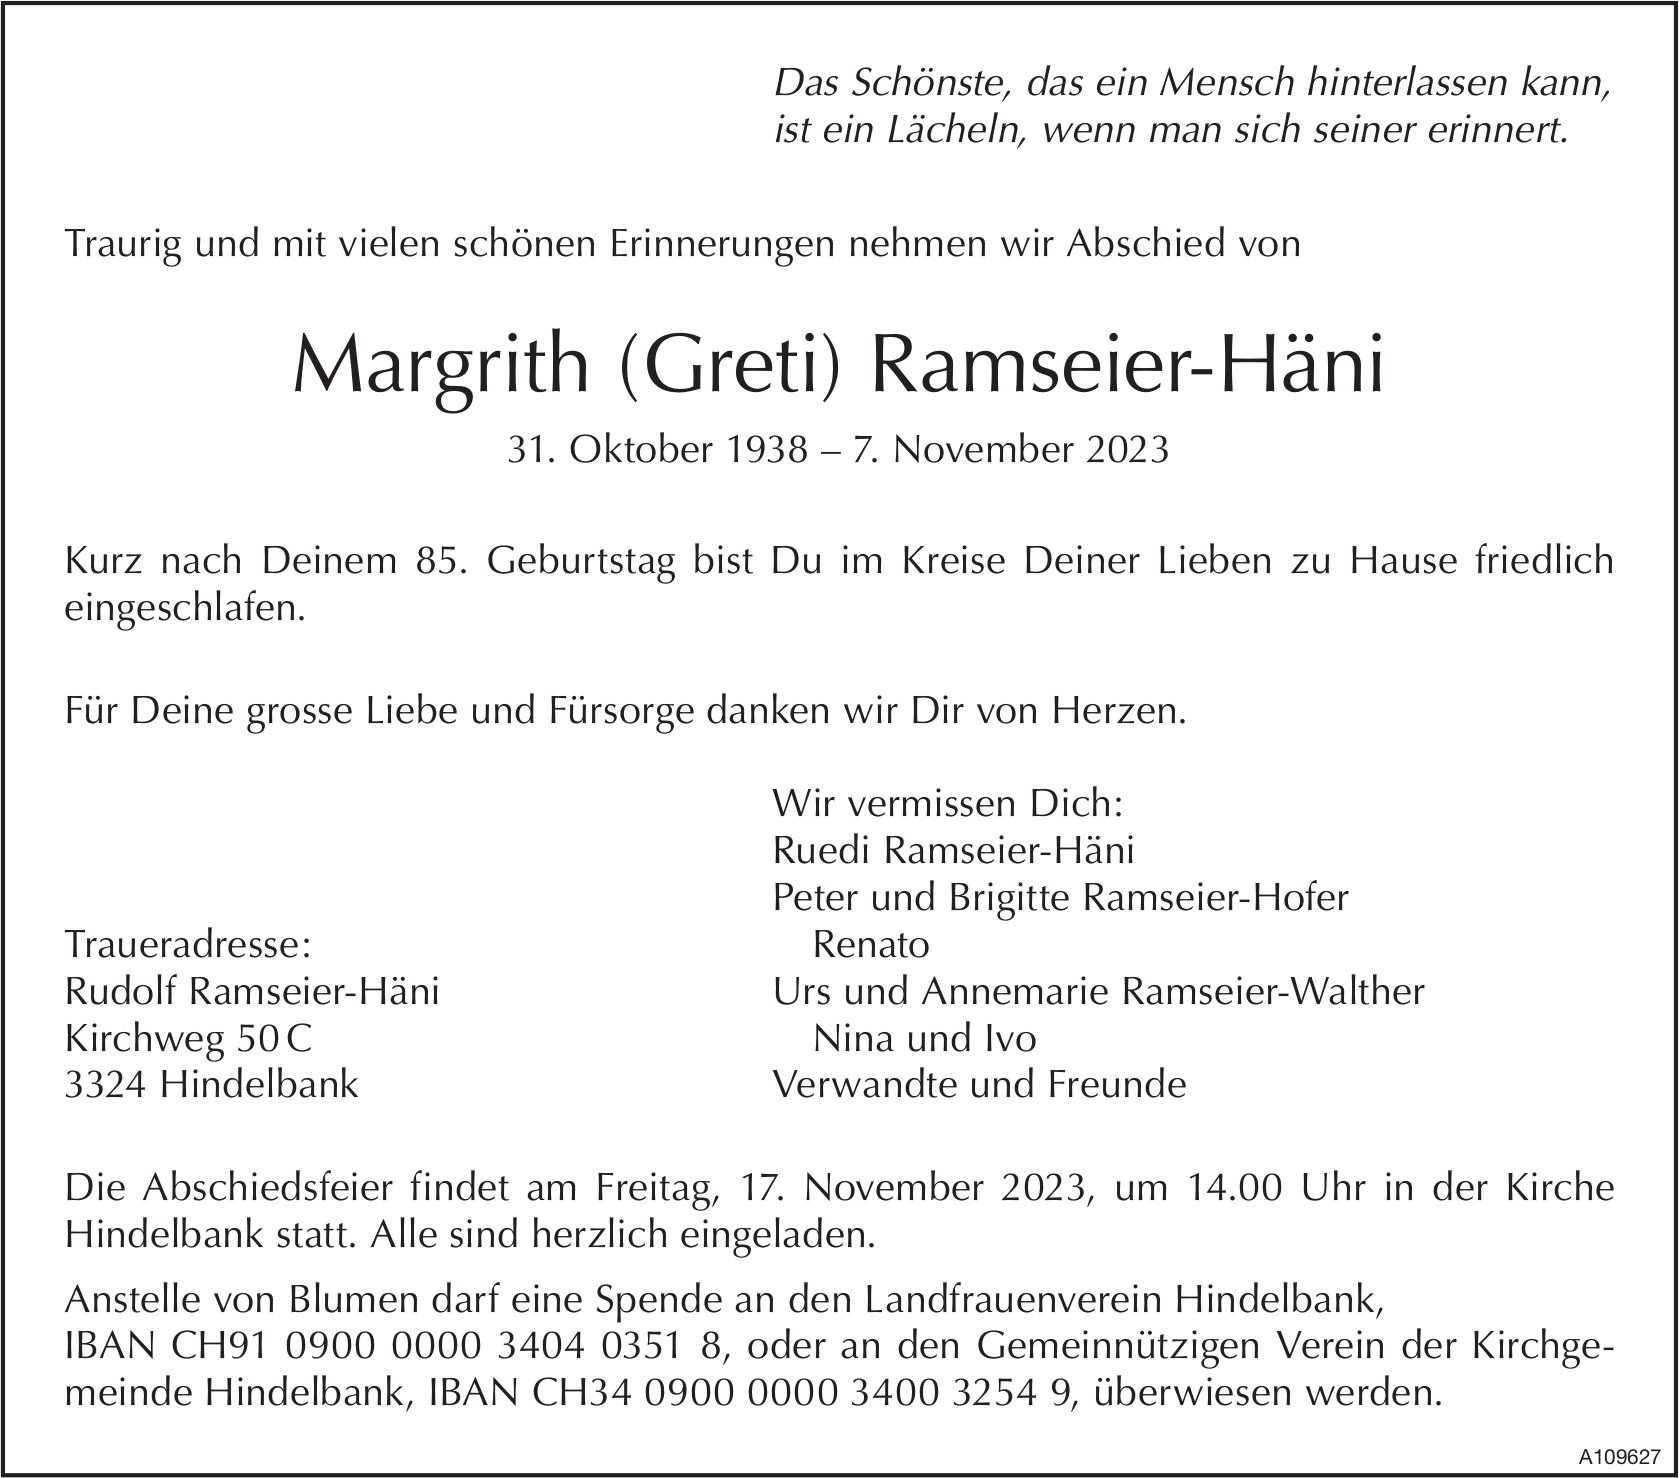 Margrith (Greti) Ramseier-Häni, November 2023 / TA